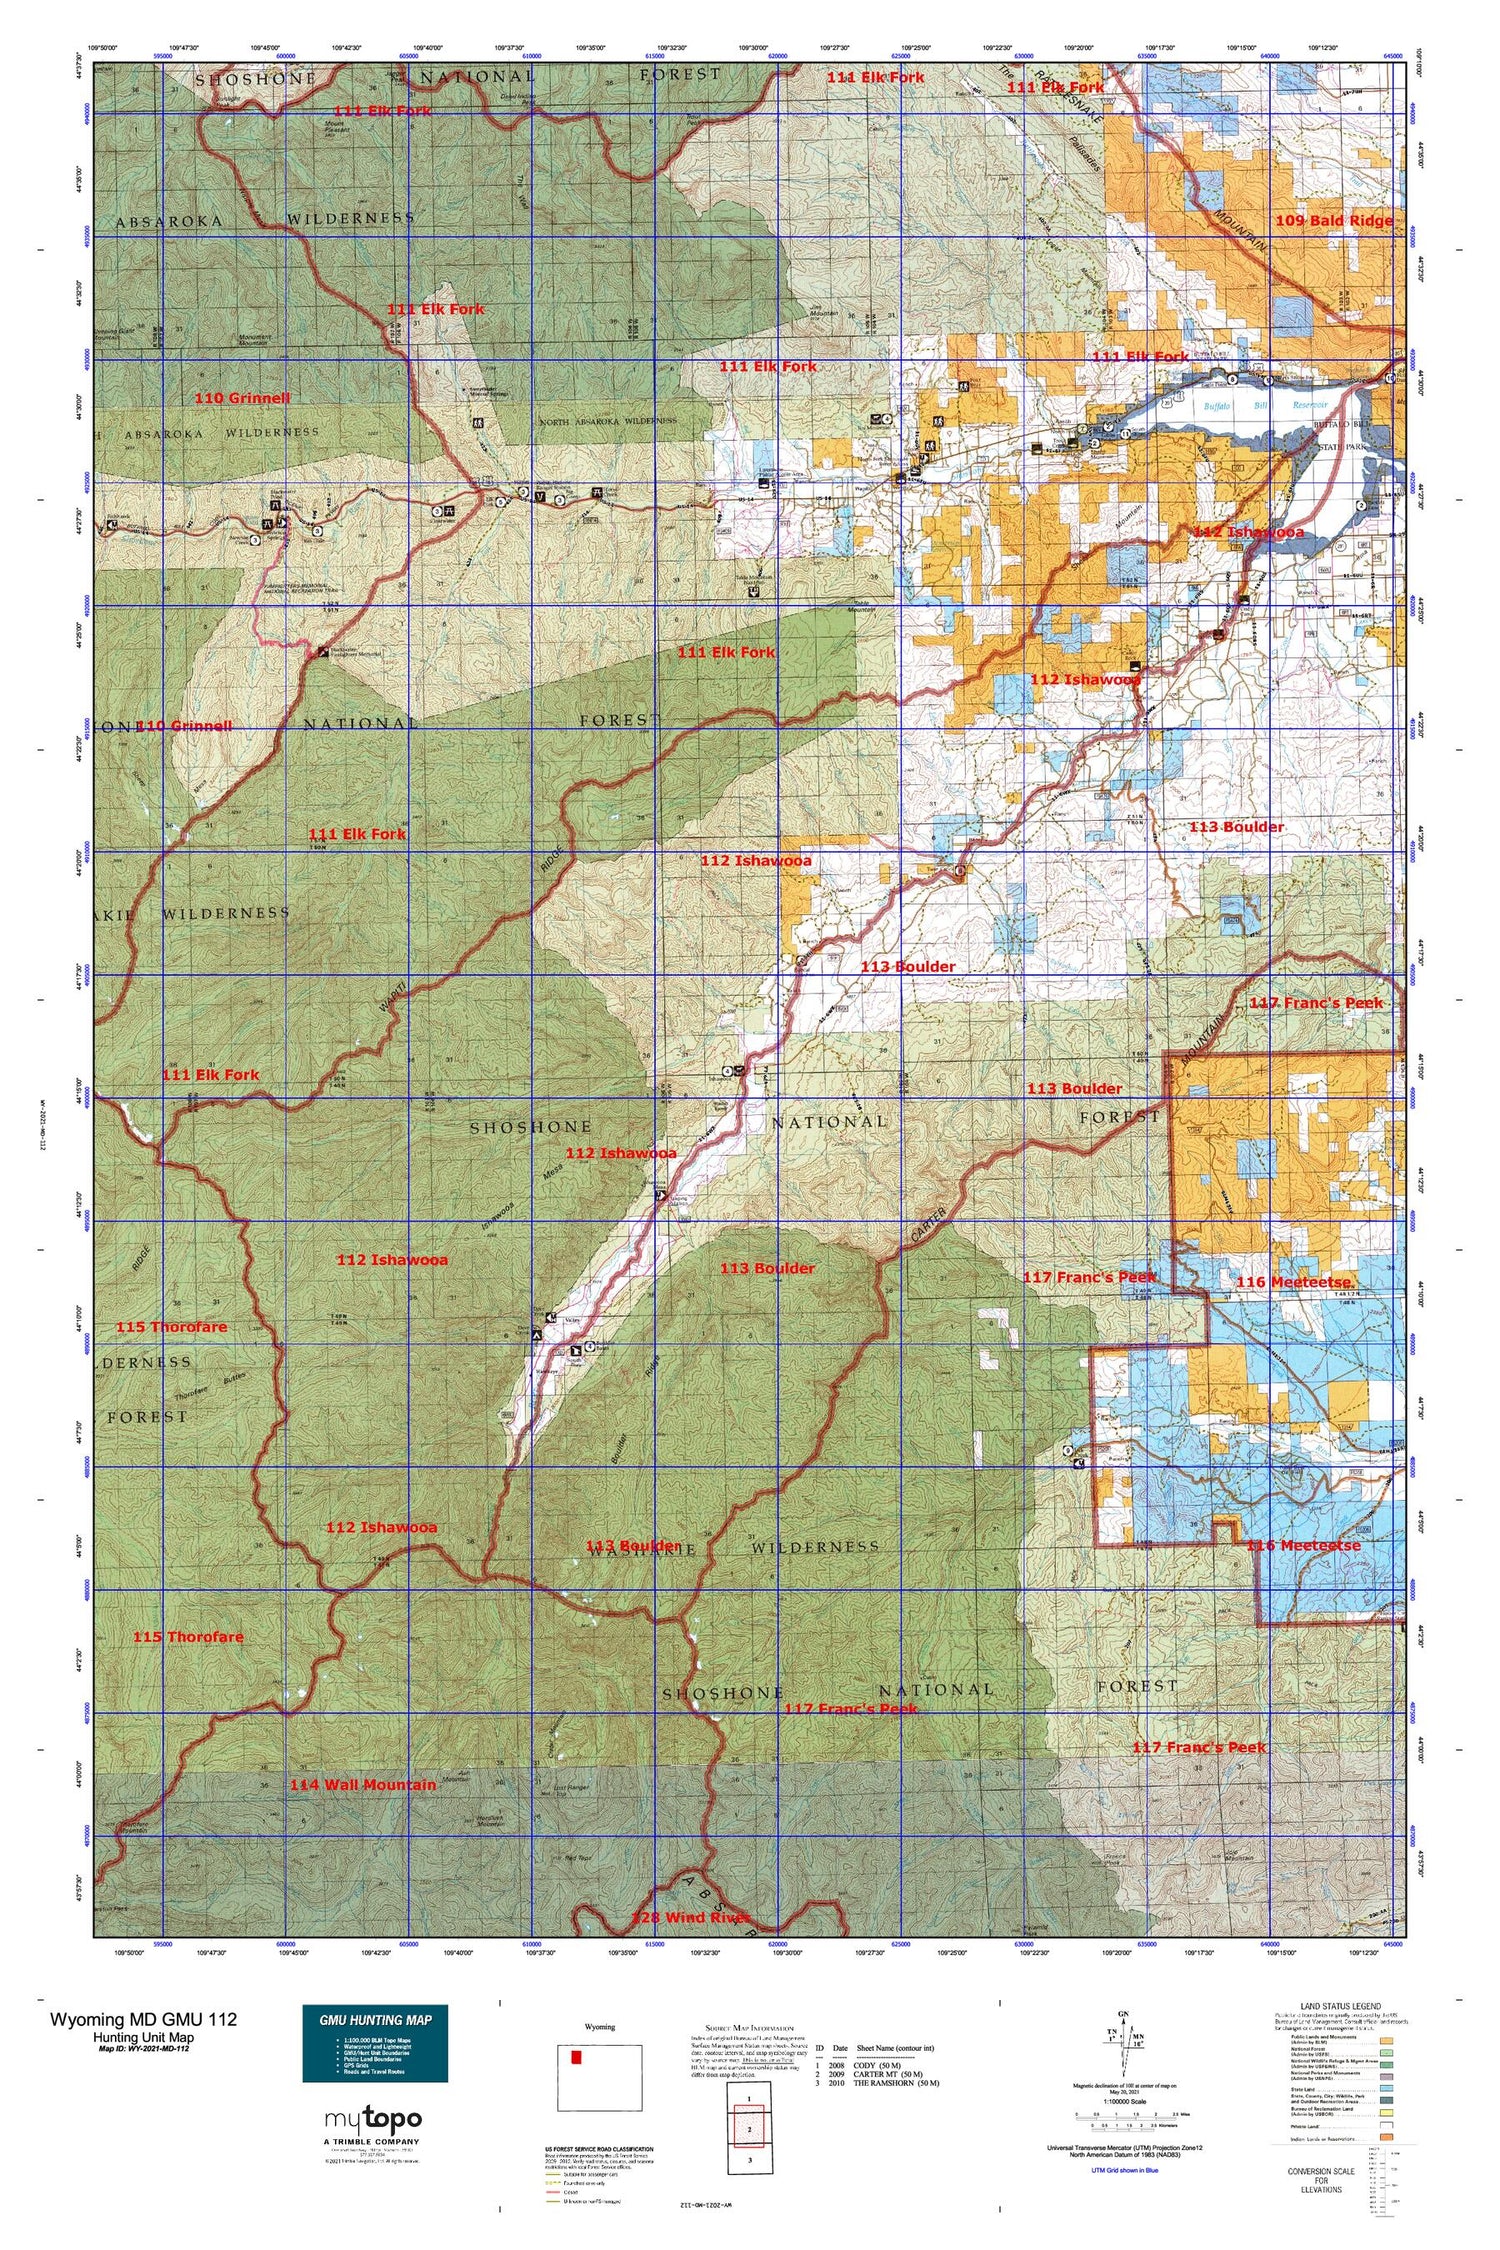 Wyoming Mule Deer GMU 112 Map Image